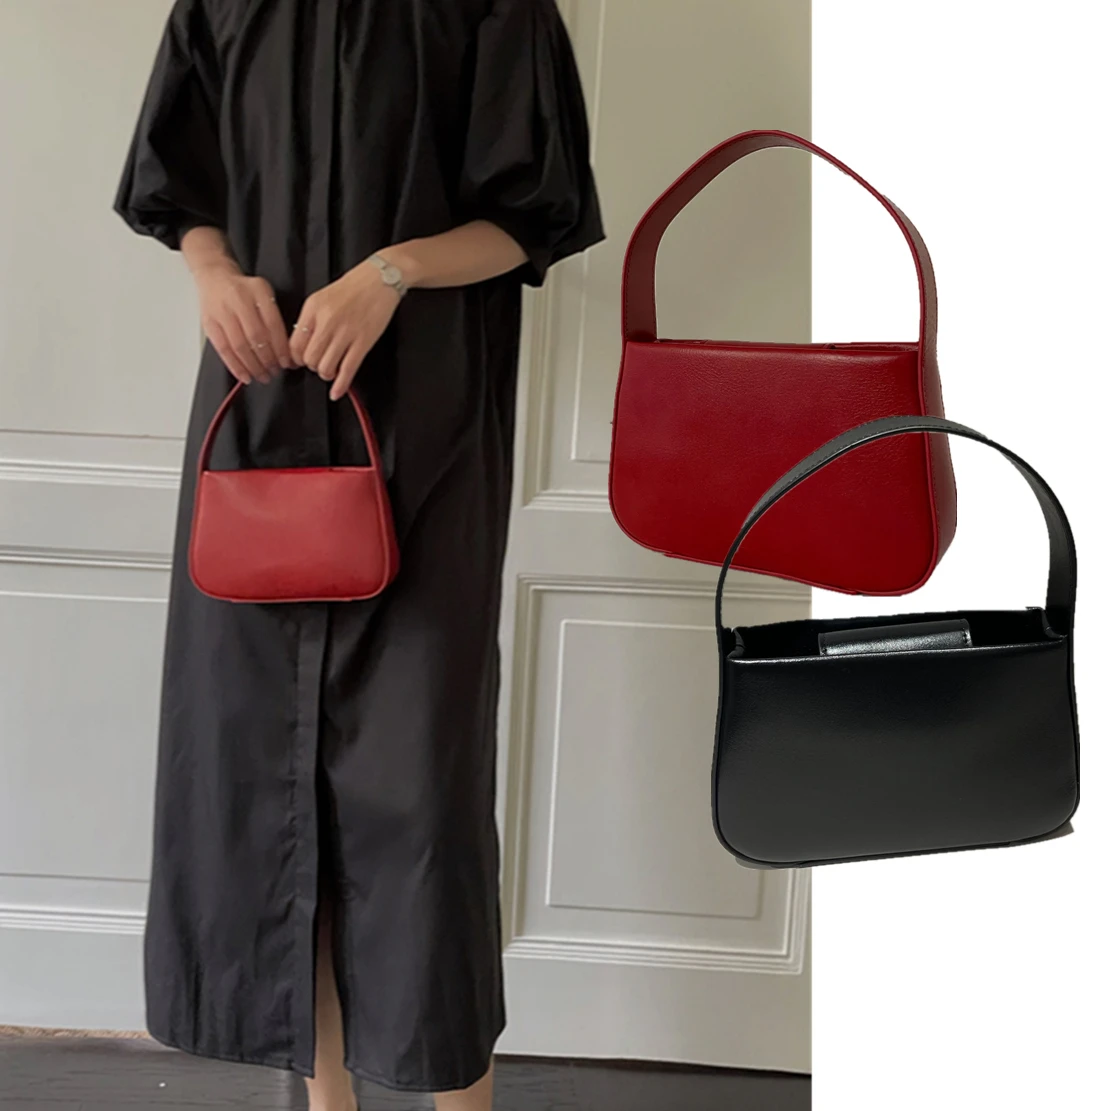 maxdutti-bolsa-de-couro-vintage-para-mulheres-bolsa-minimalista-nordica-pequena-design-de-nicho